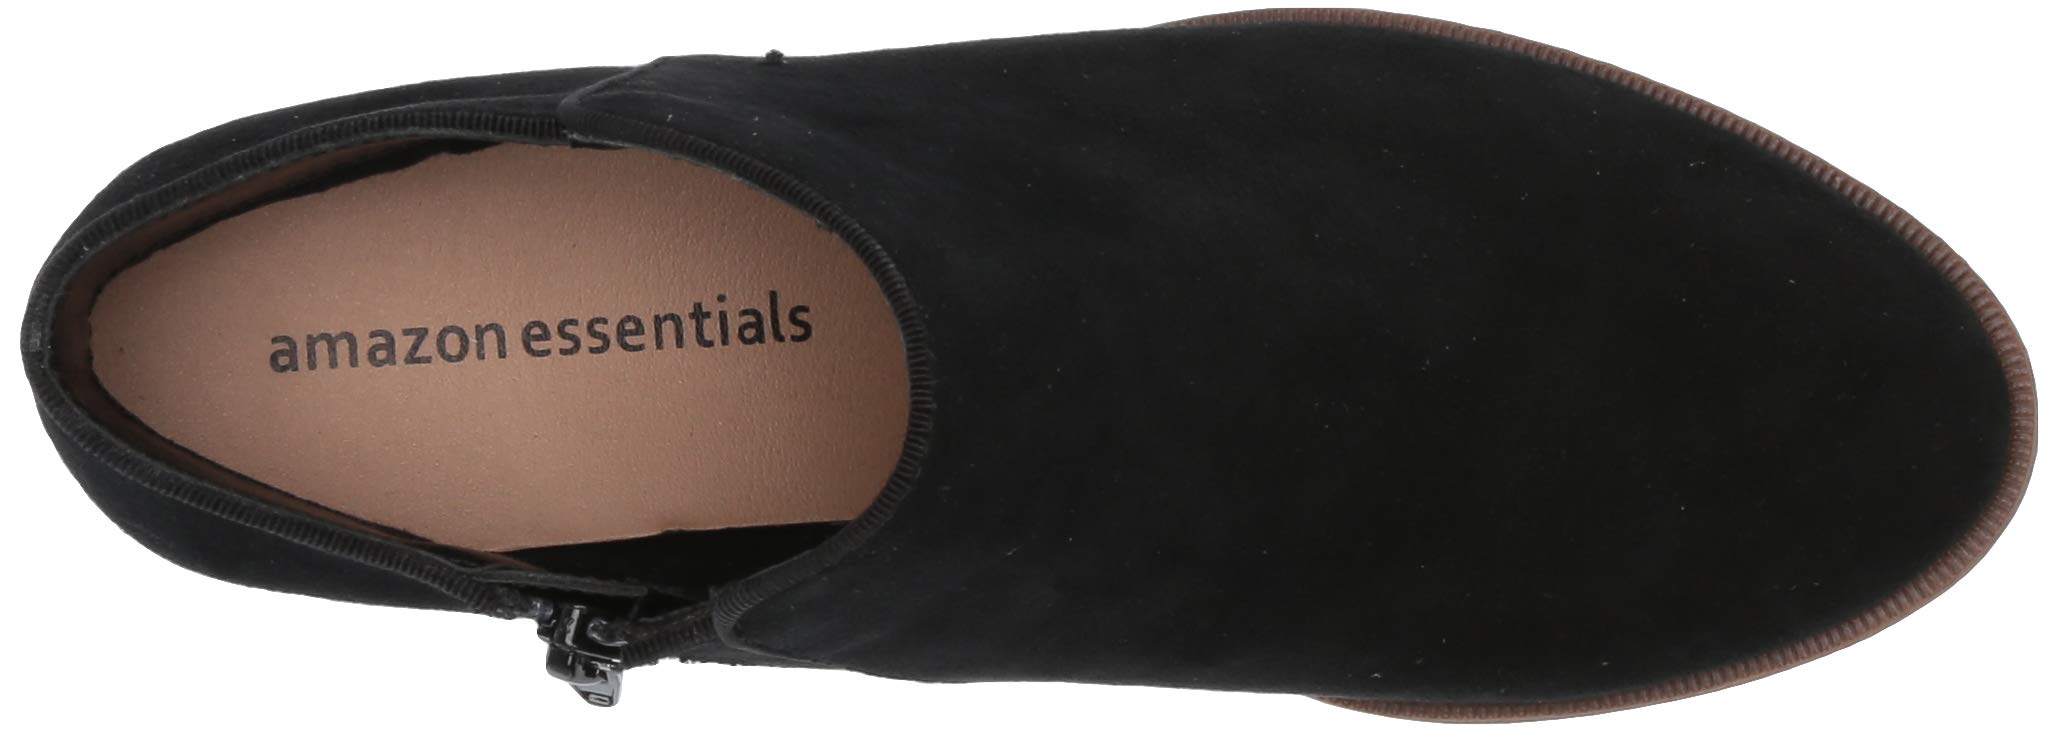 Amazon Essentials Women's Ankle Boot